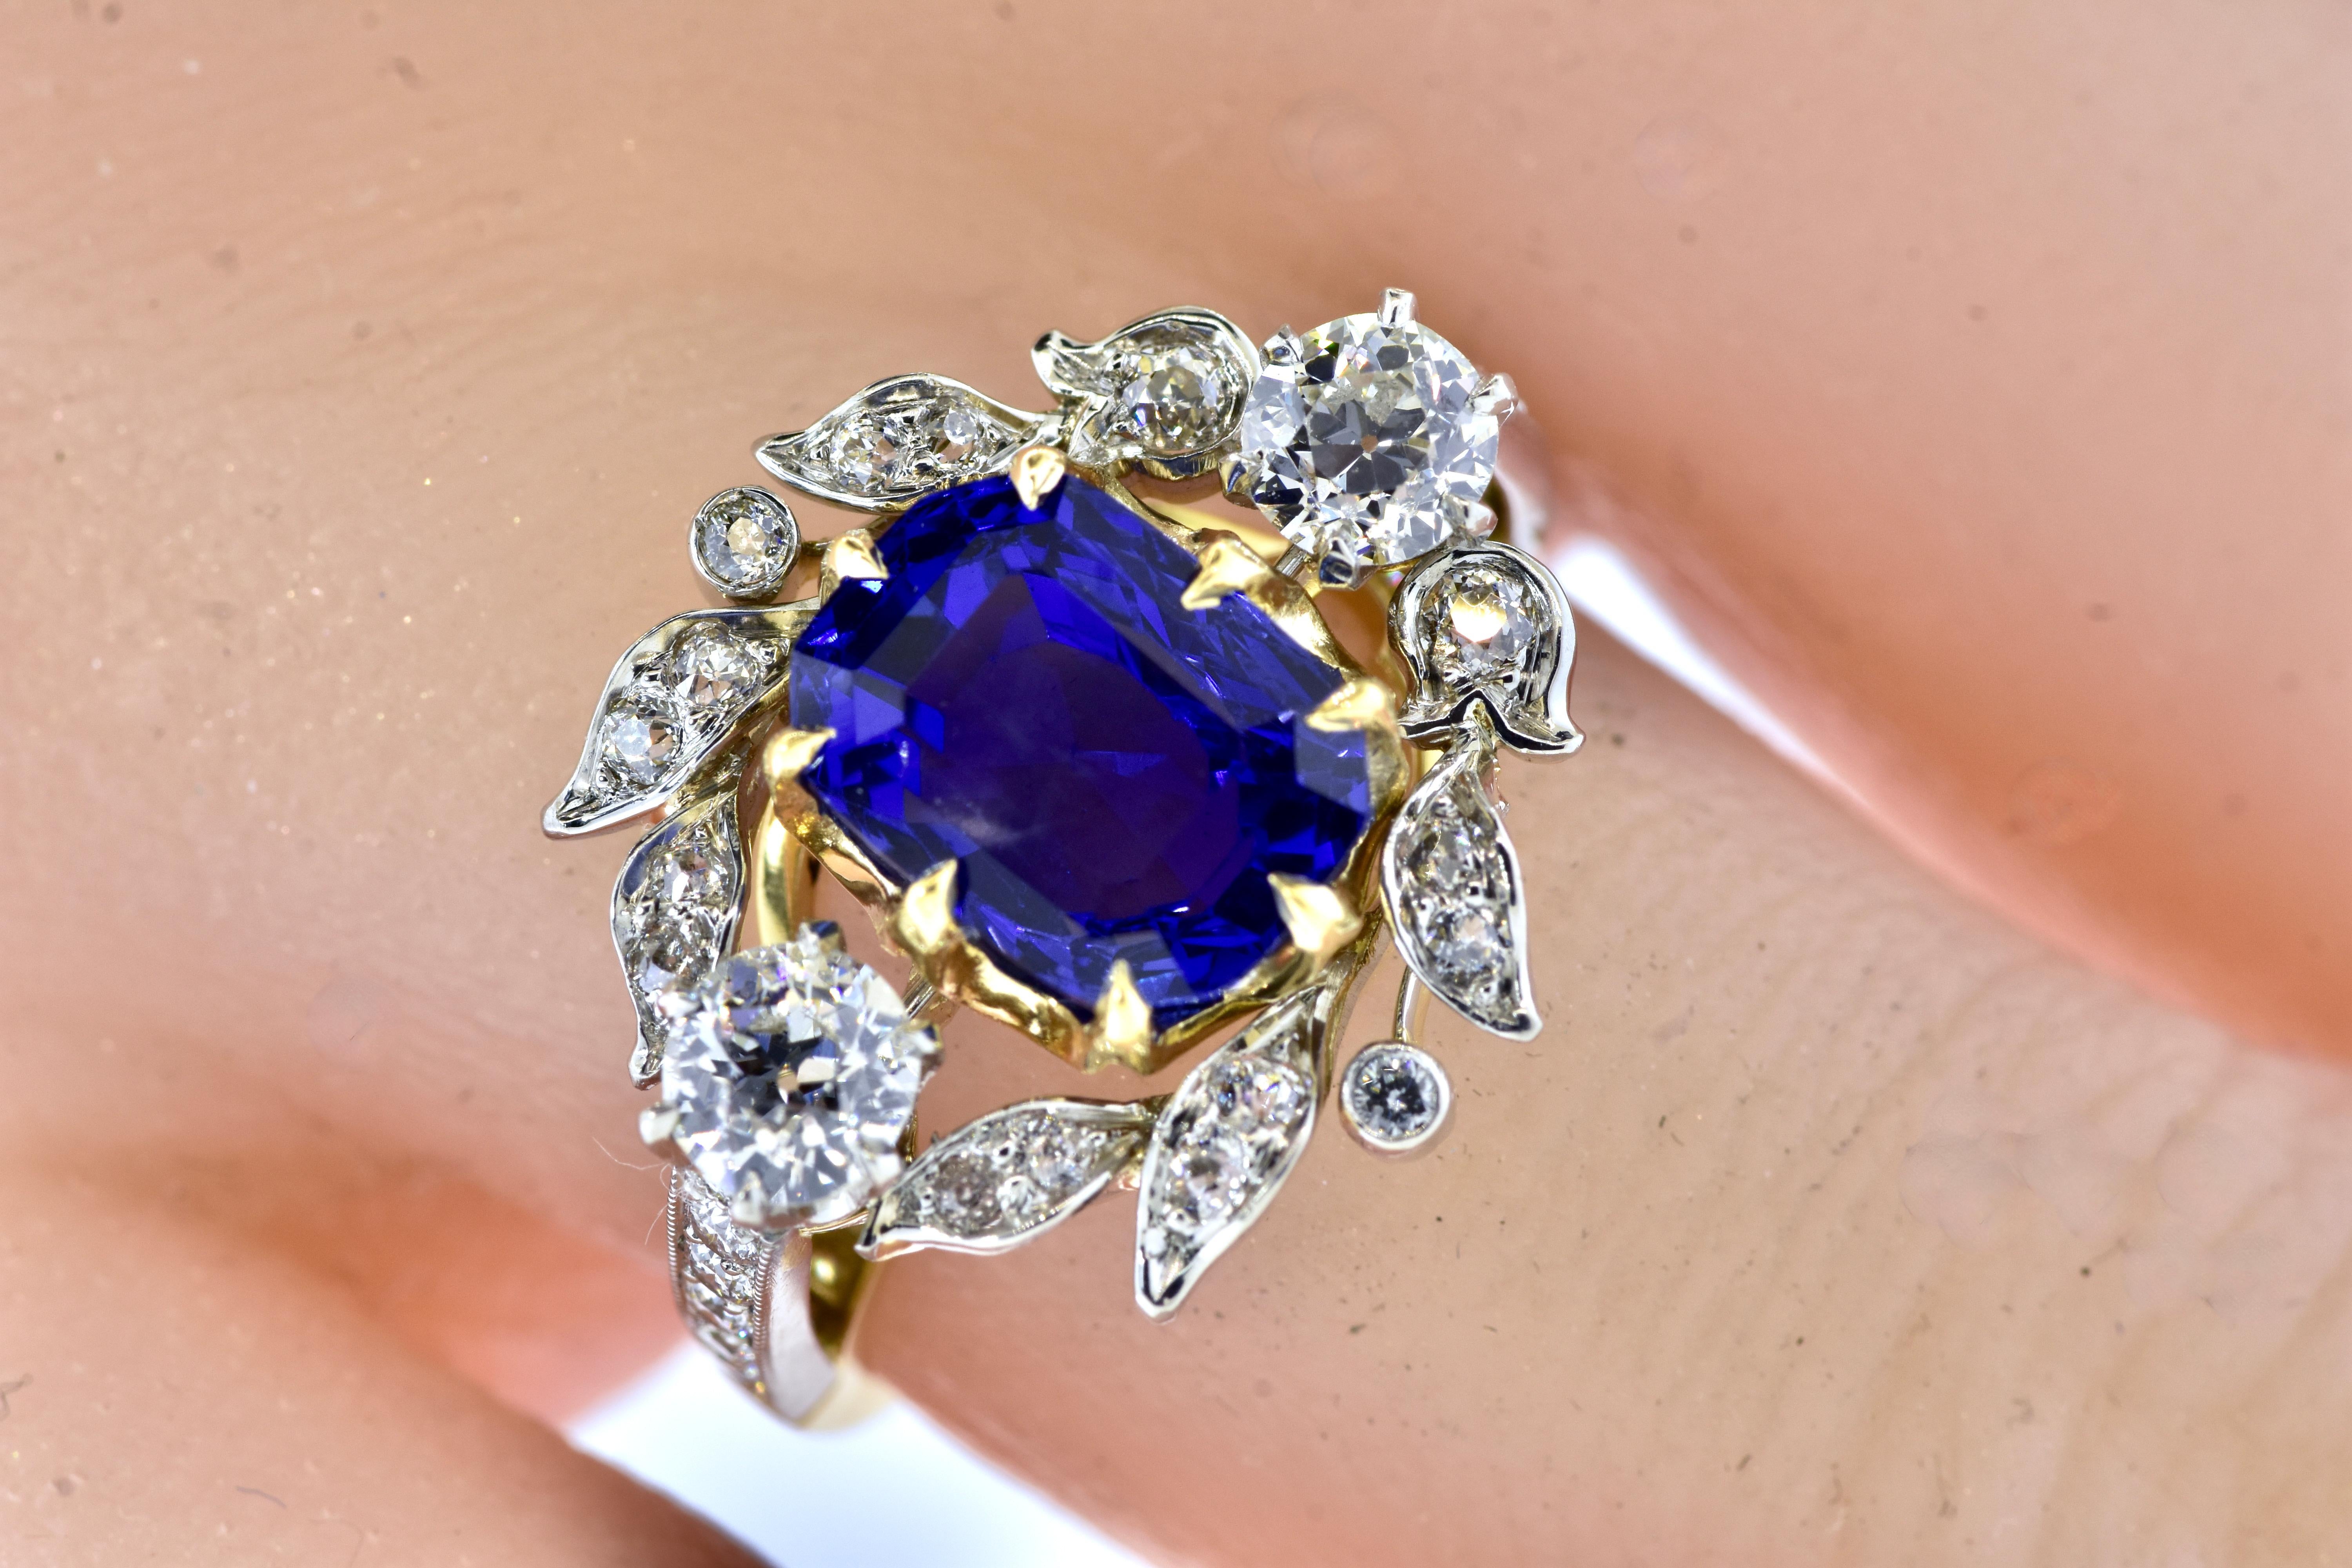 Edwardian GIA Natural Unheated Ceylon Sapphire 4.54 cts. & Diamond Antique Ring, c. 1920